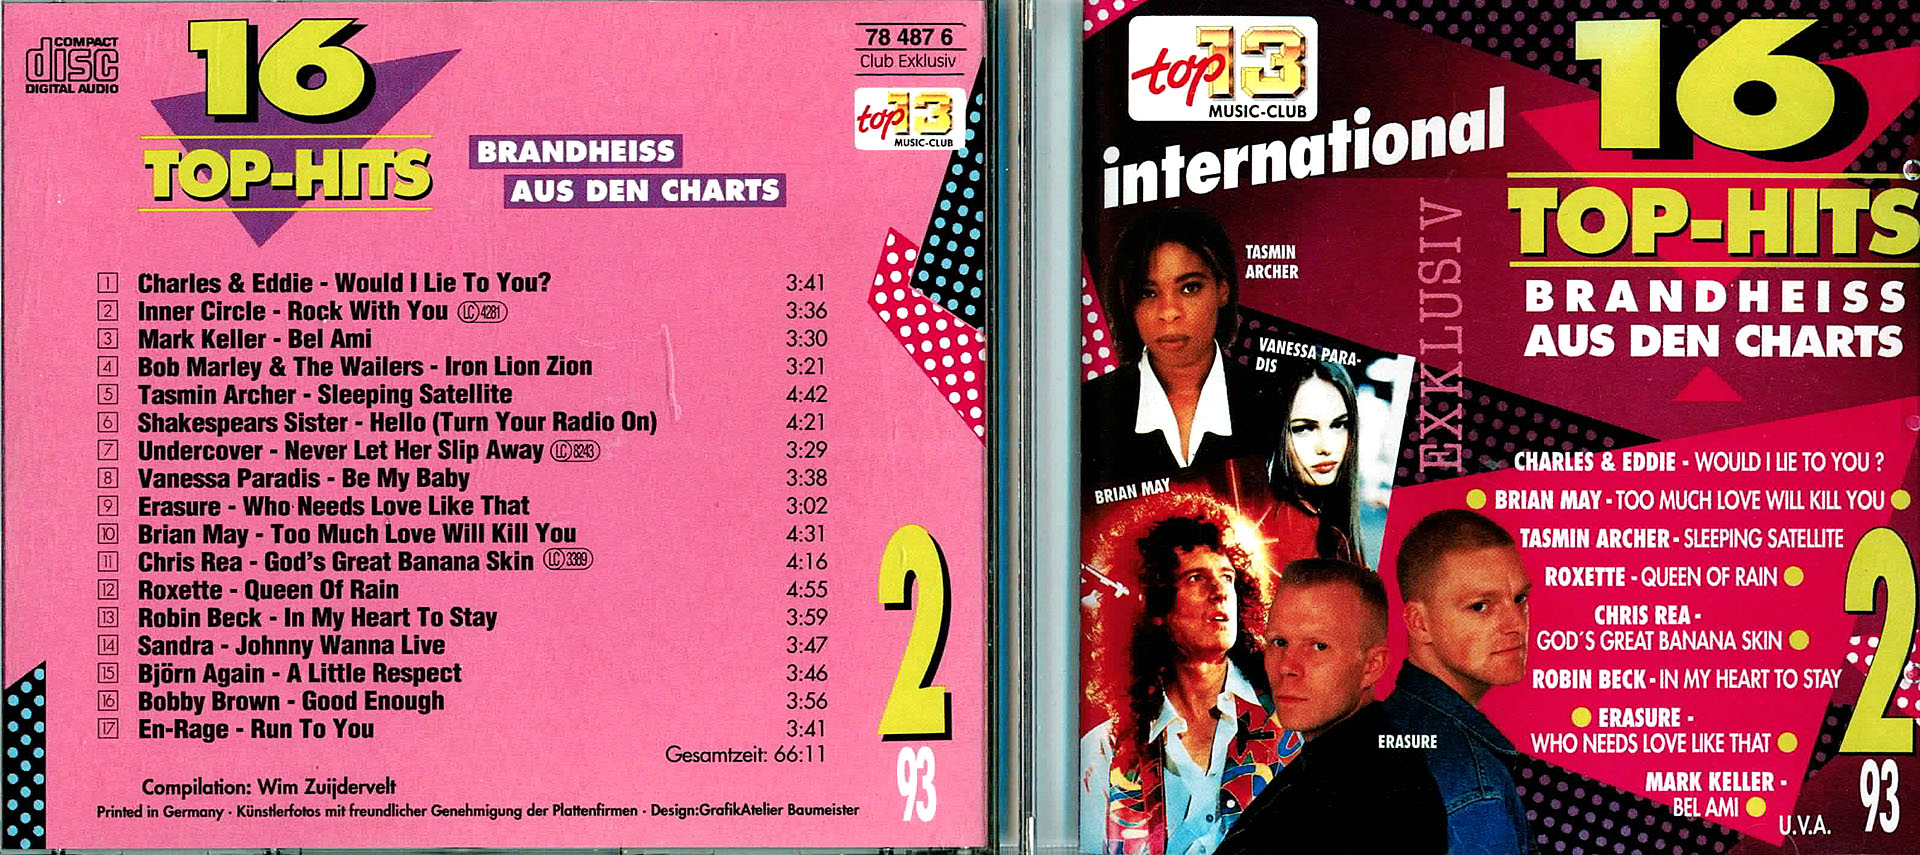 16 Top Hits aus den Charts 2/93 - Charles & Eddie / Brian May / Roxette / Chriss Rea u.v.a.m